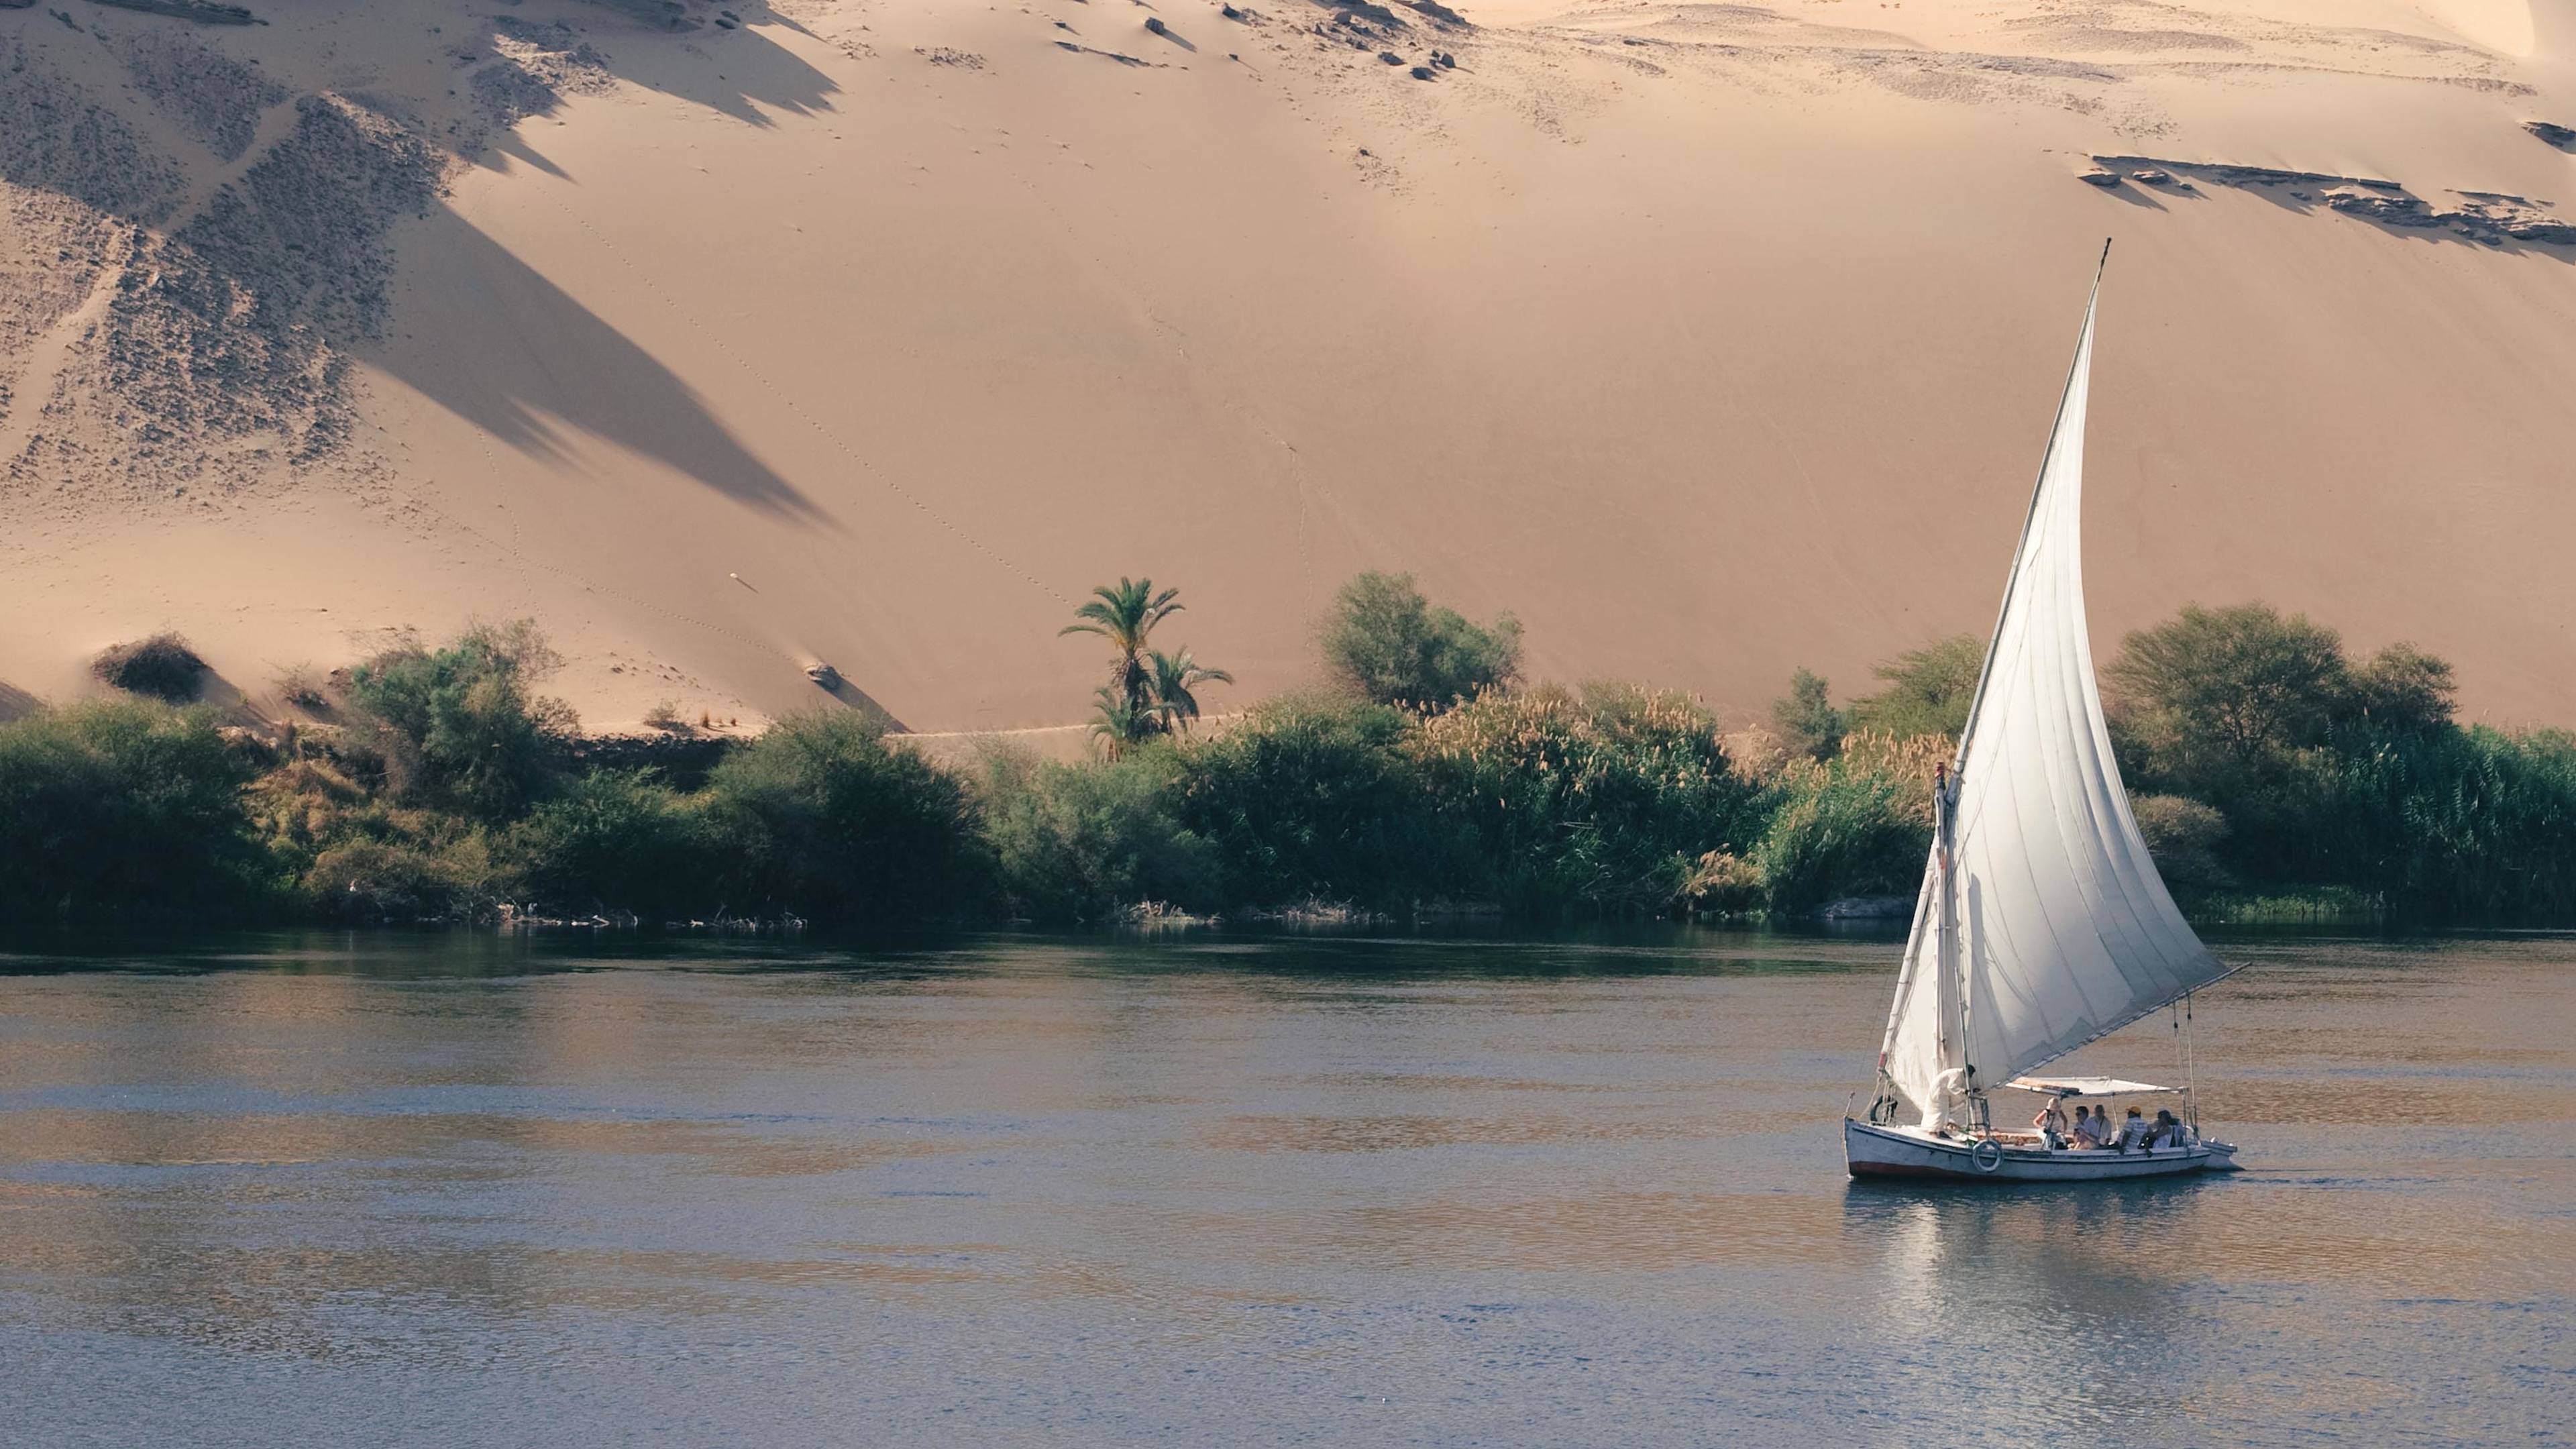 Felucca on the Nil, Egypt.